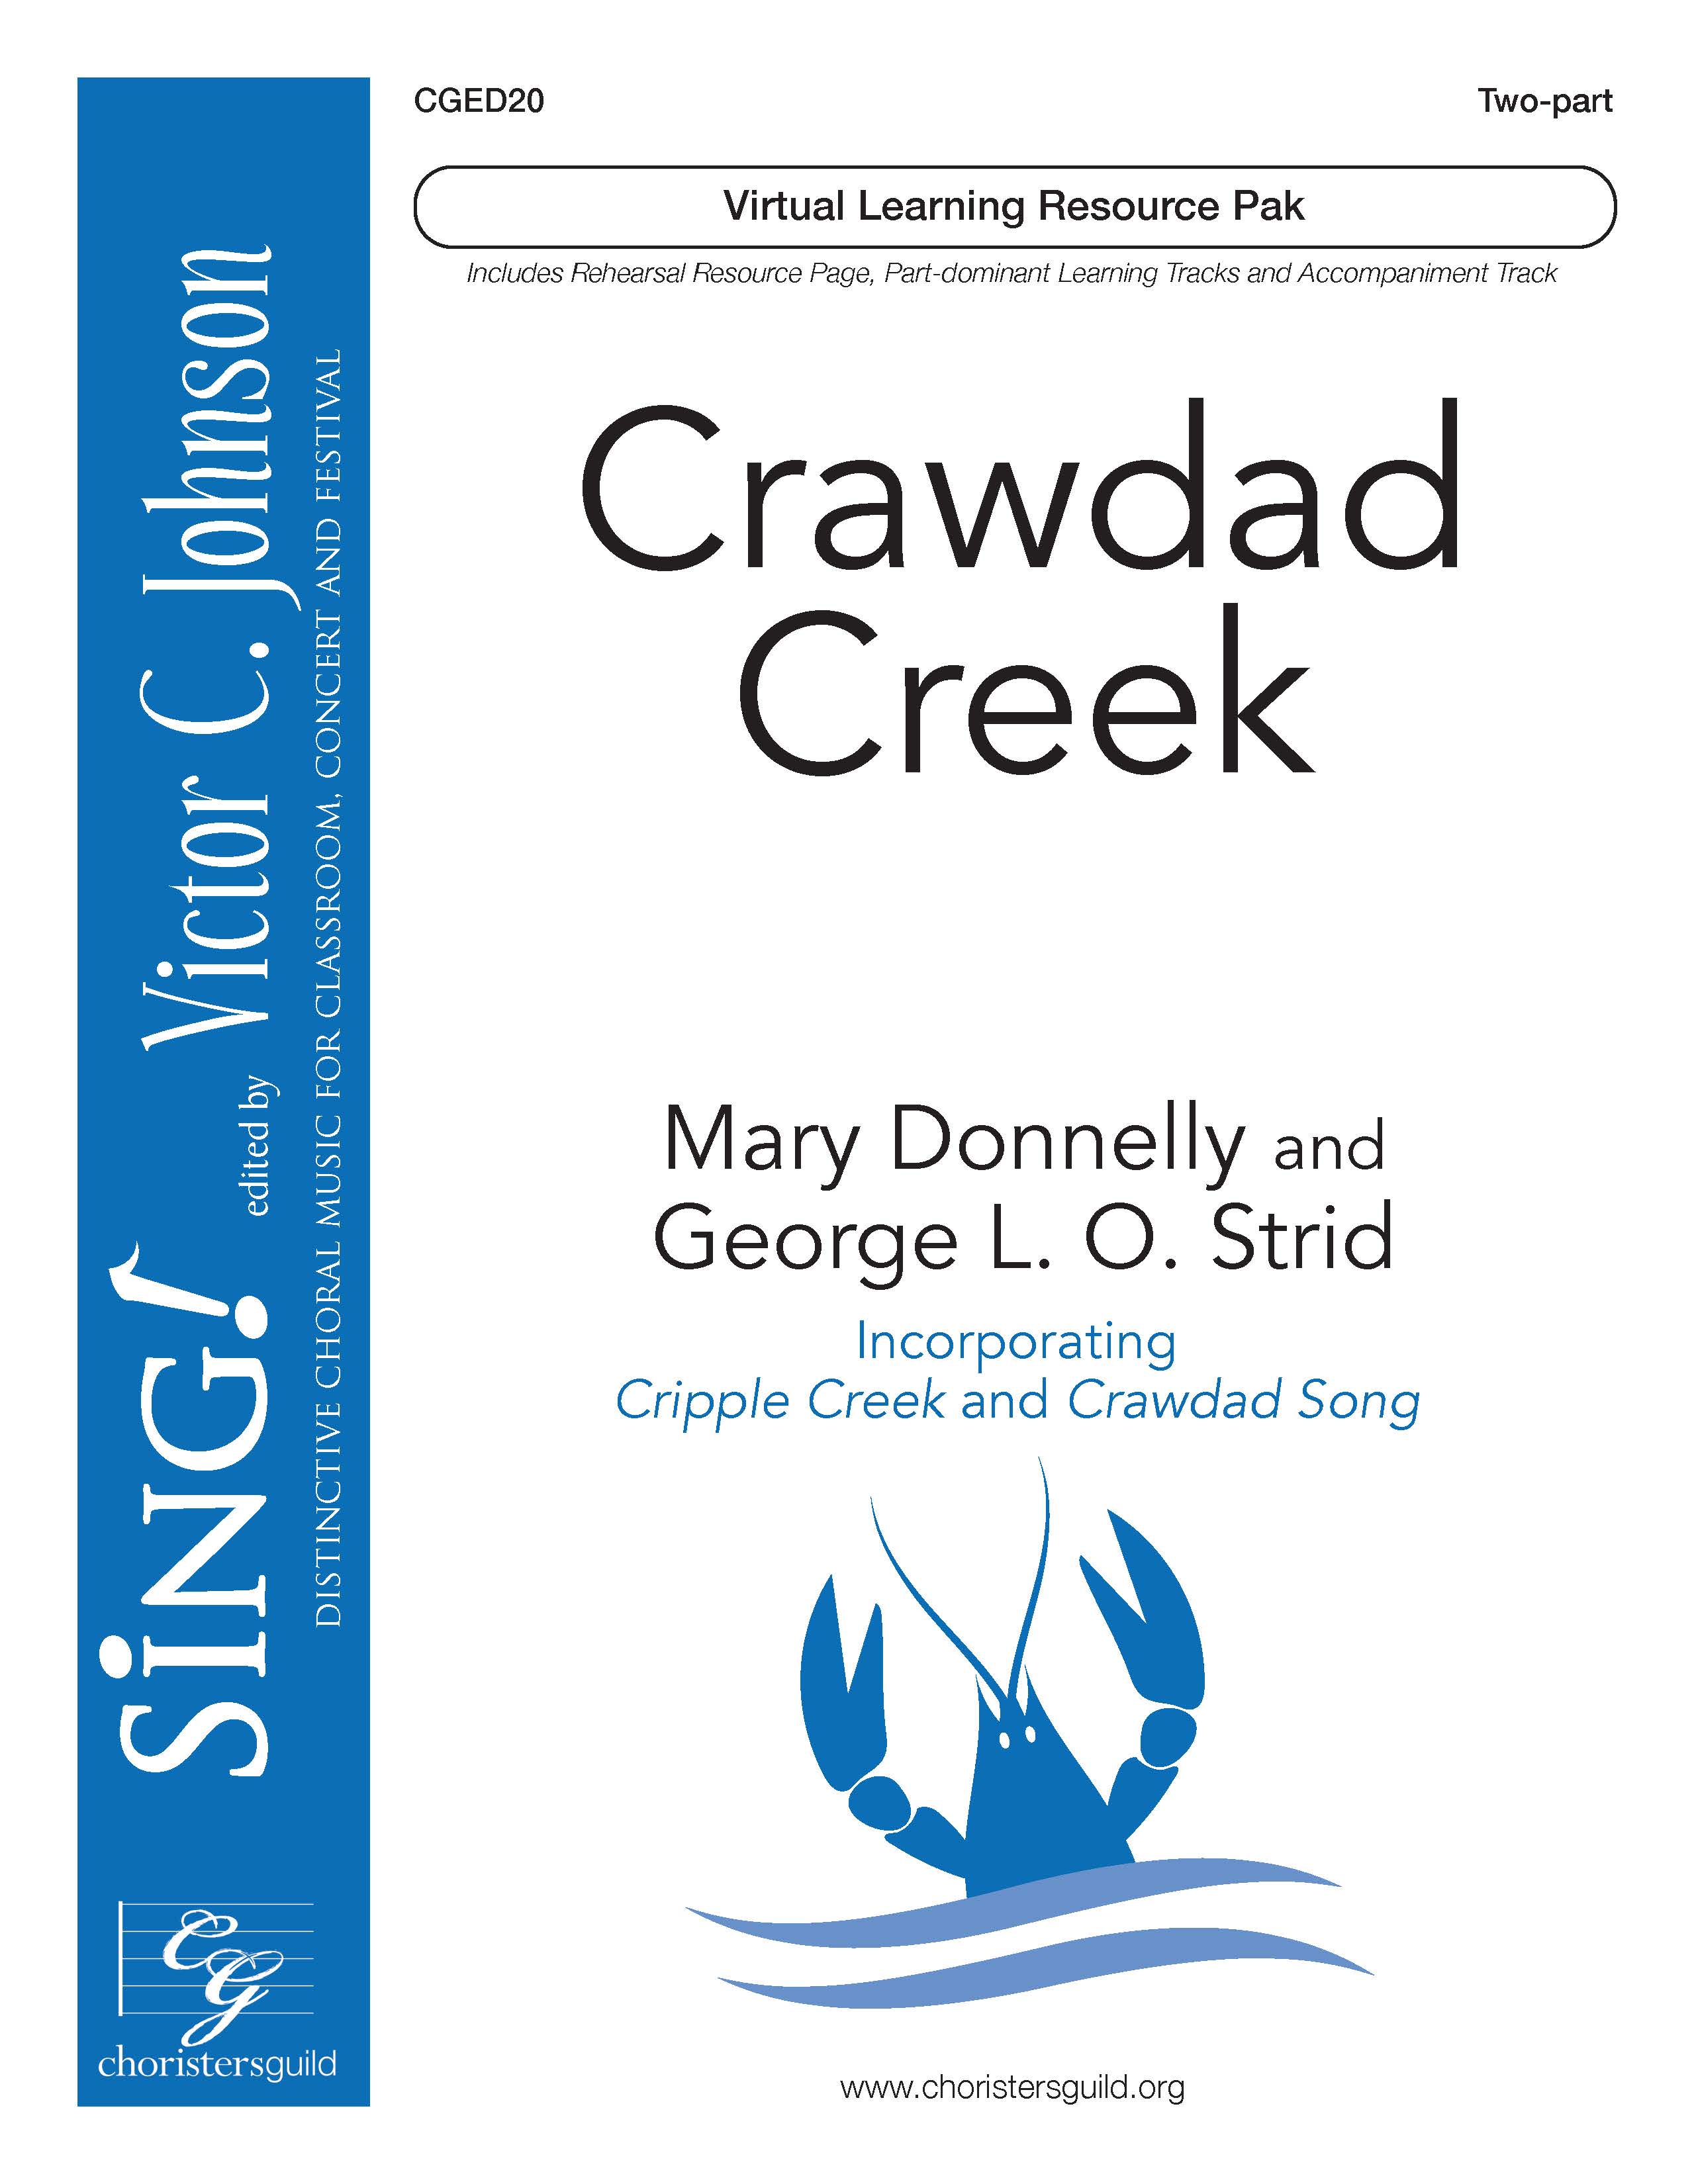 Crawdad Creek (Virtual Learning Resource Pak) - Two-part